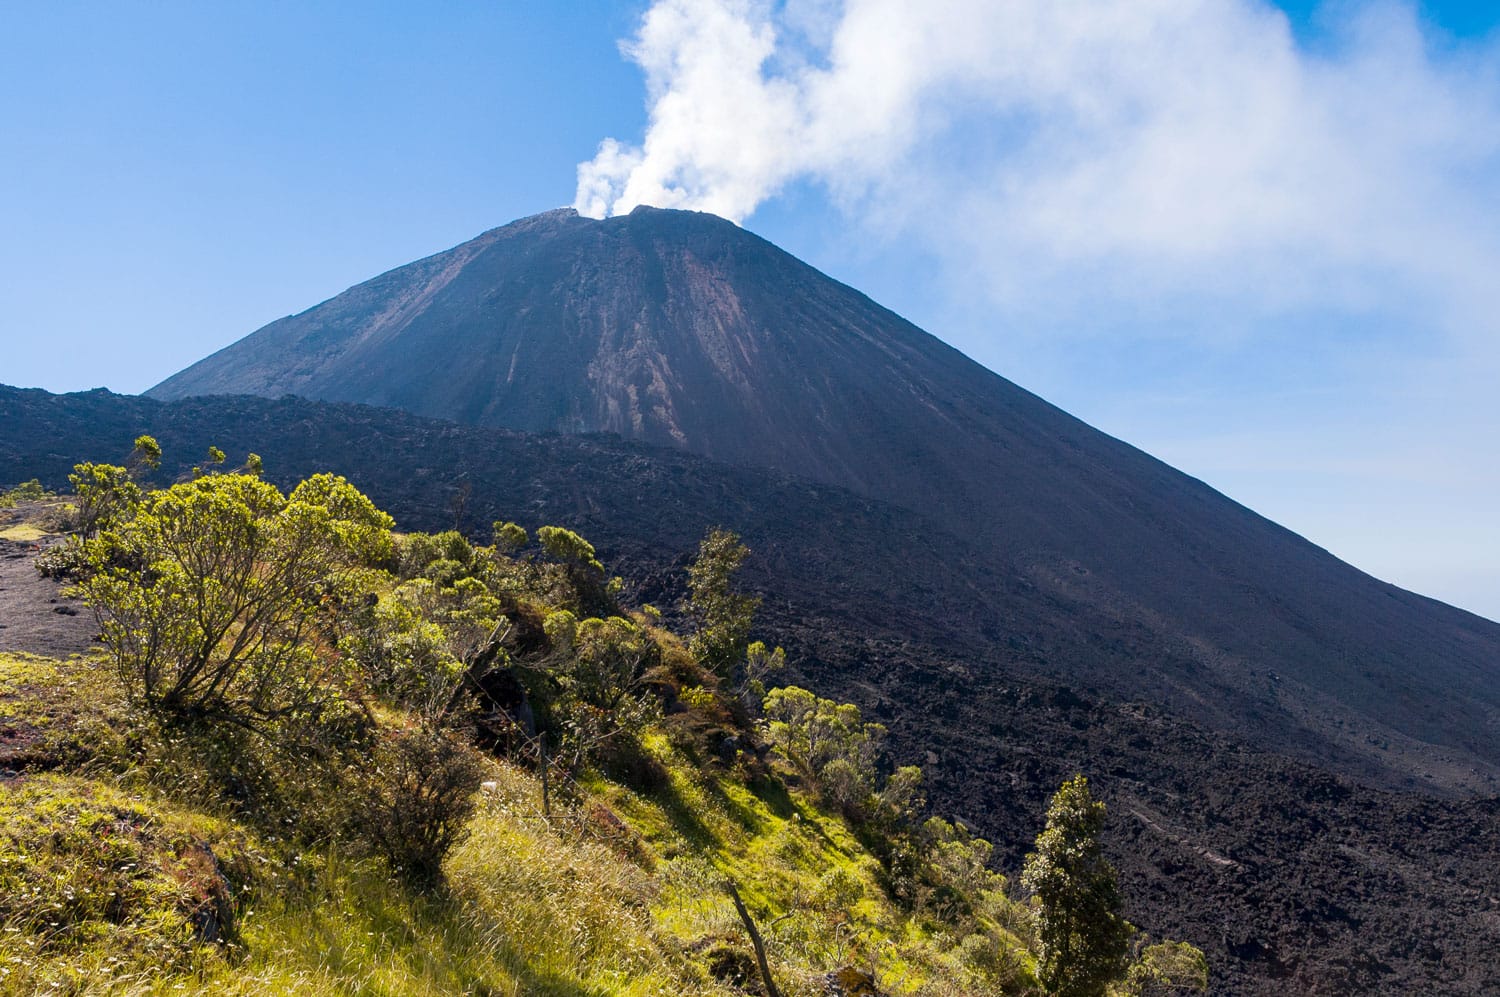 Volcano Pacaya in Guatemala, Central America.